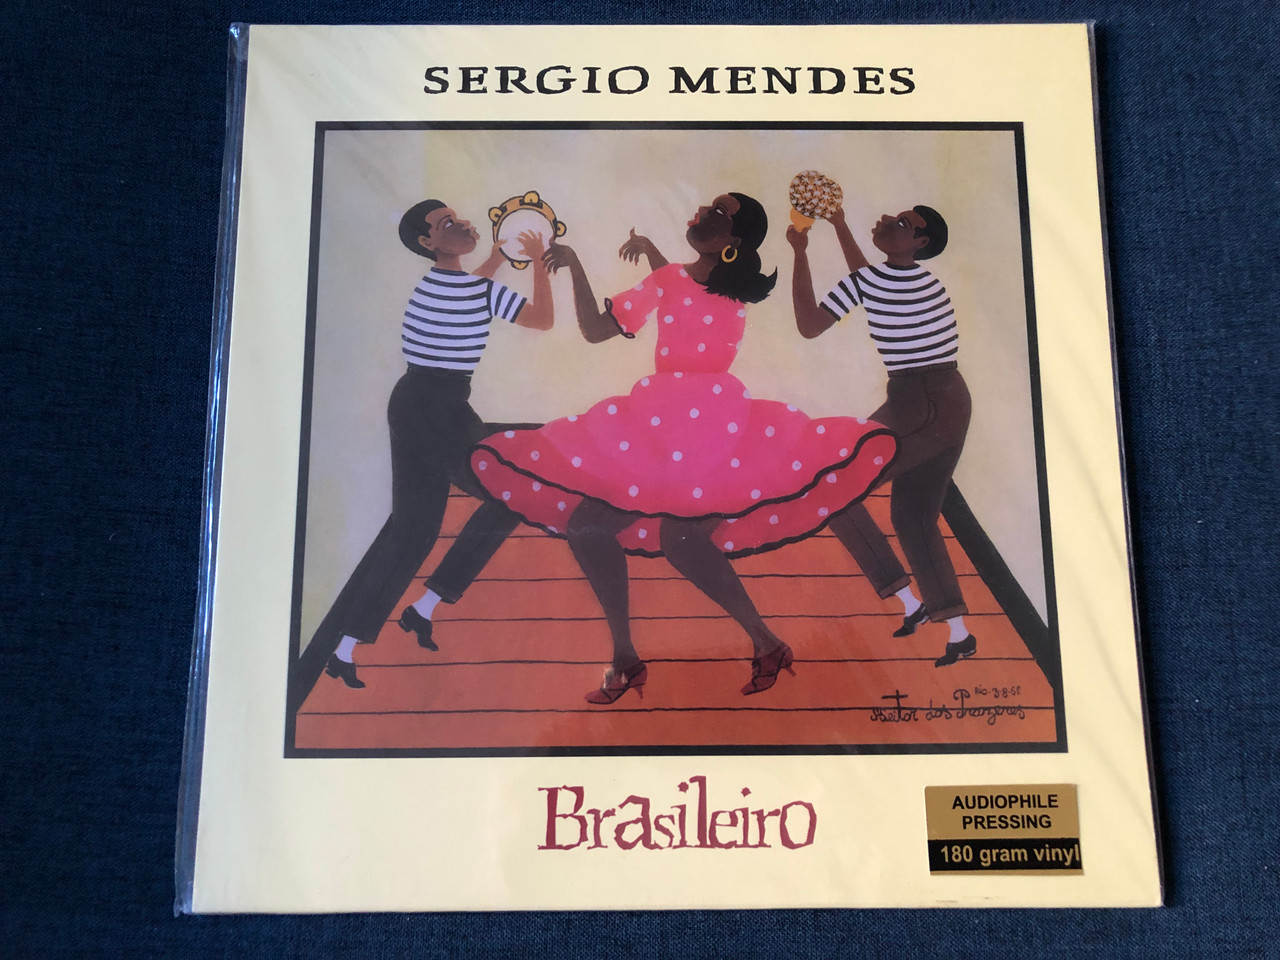 Sergio Mendes - Brasileiro / Audiophile Pressing. 180 gram vinyl